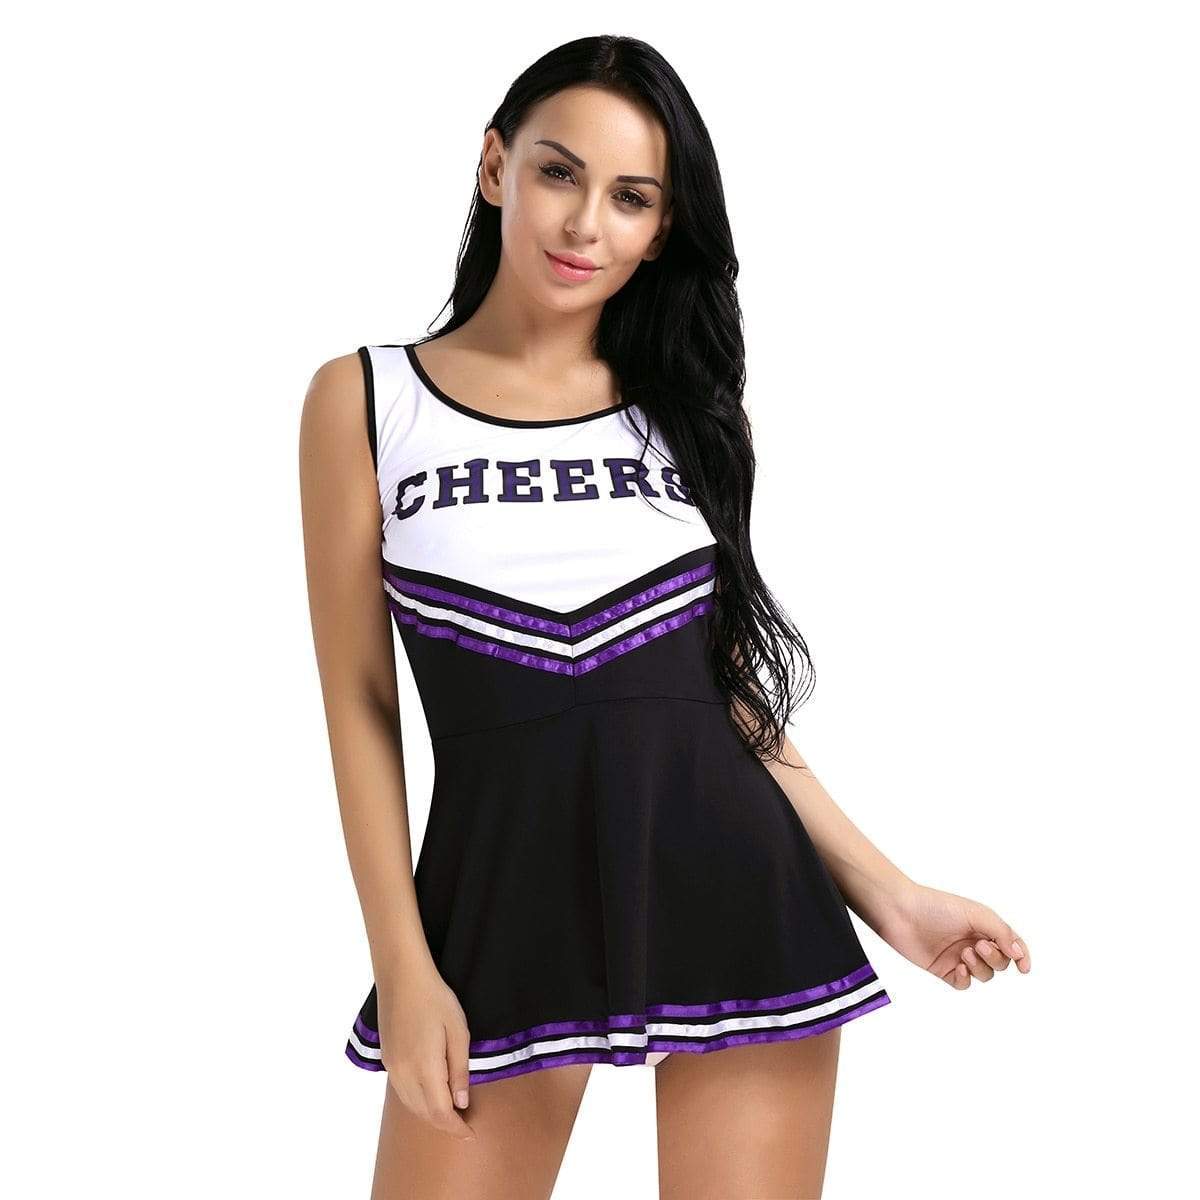 "CHEERS" Cheerleader Striped Dress